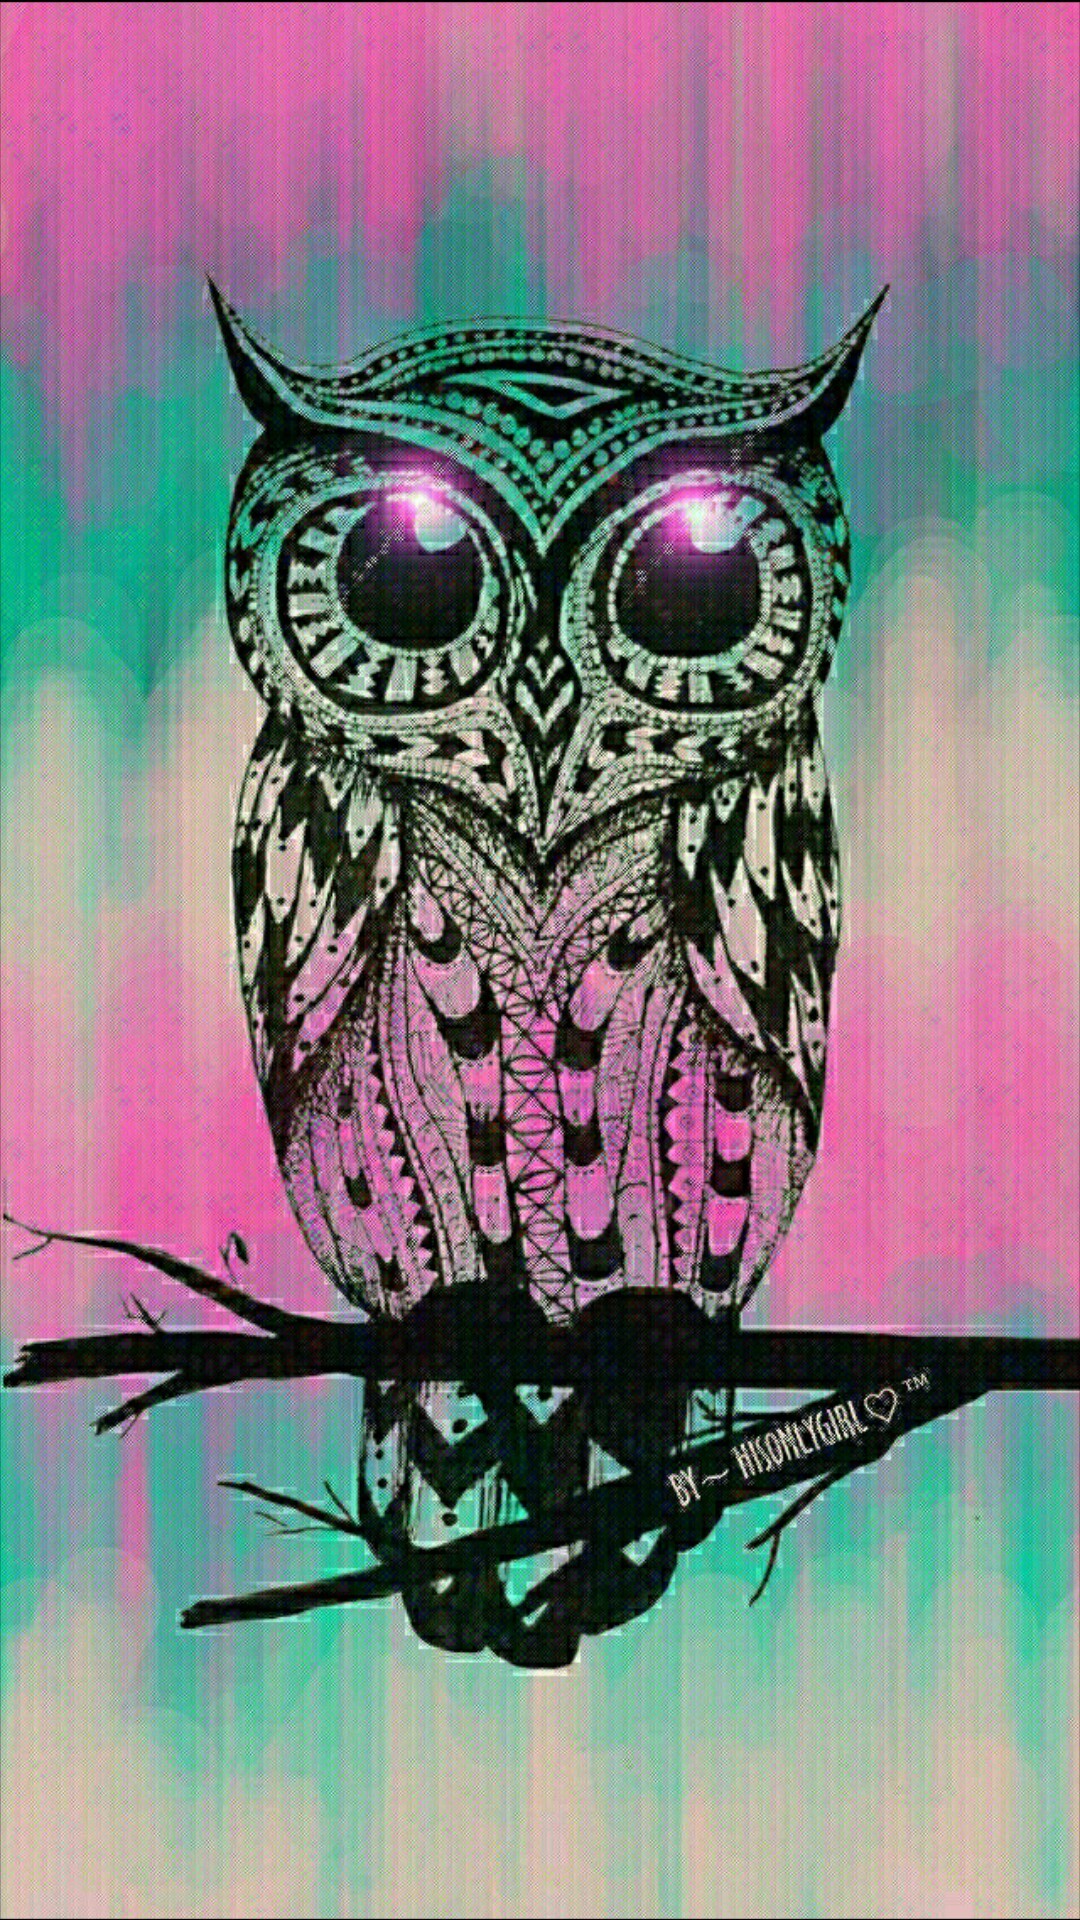 Explore Owl Wallpaper, Cute Owl, and more